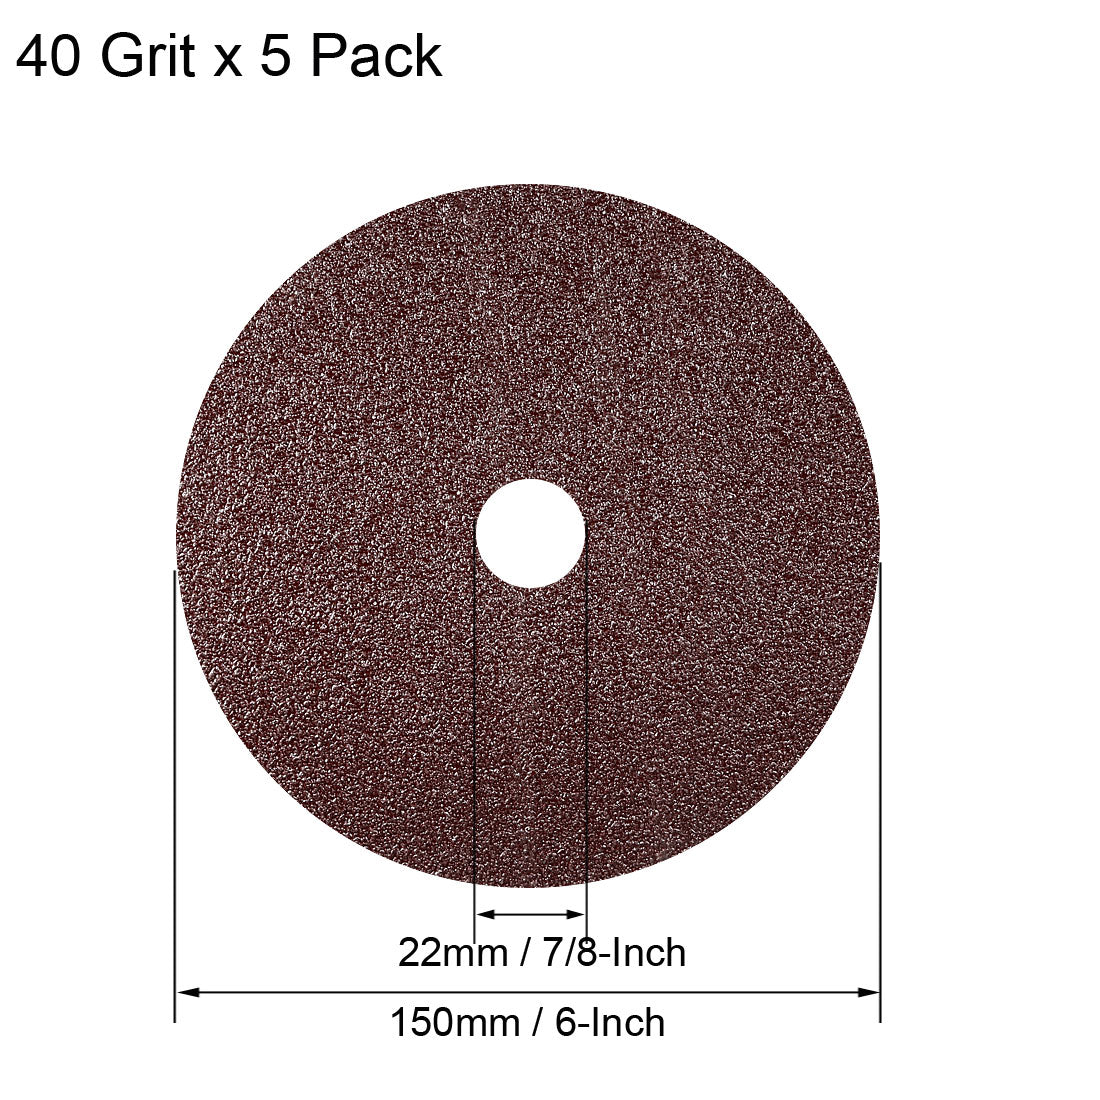 Uxcell Uxcell 6-Inch x 7/8-Inch Aluminum Oxide Resin Fiber Discs, Center Hole 120 Grit Sanding Grinding Discs, 5 Pcs